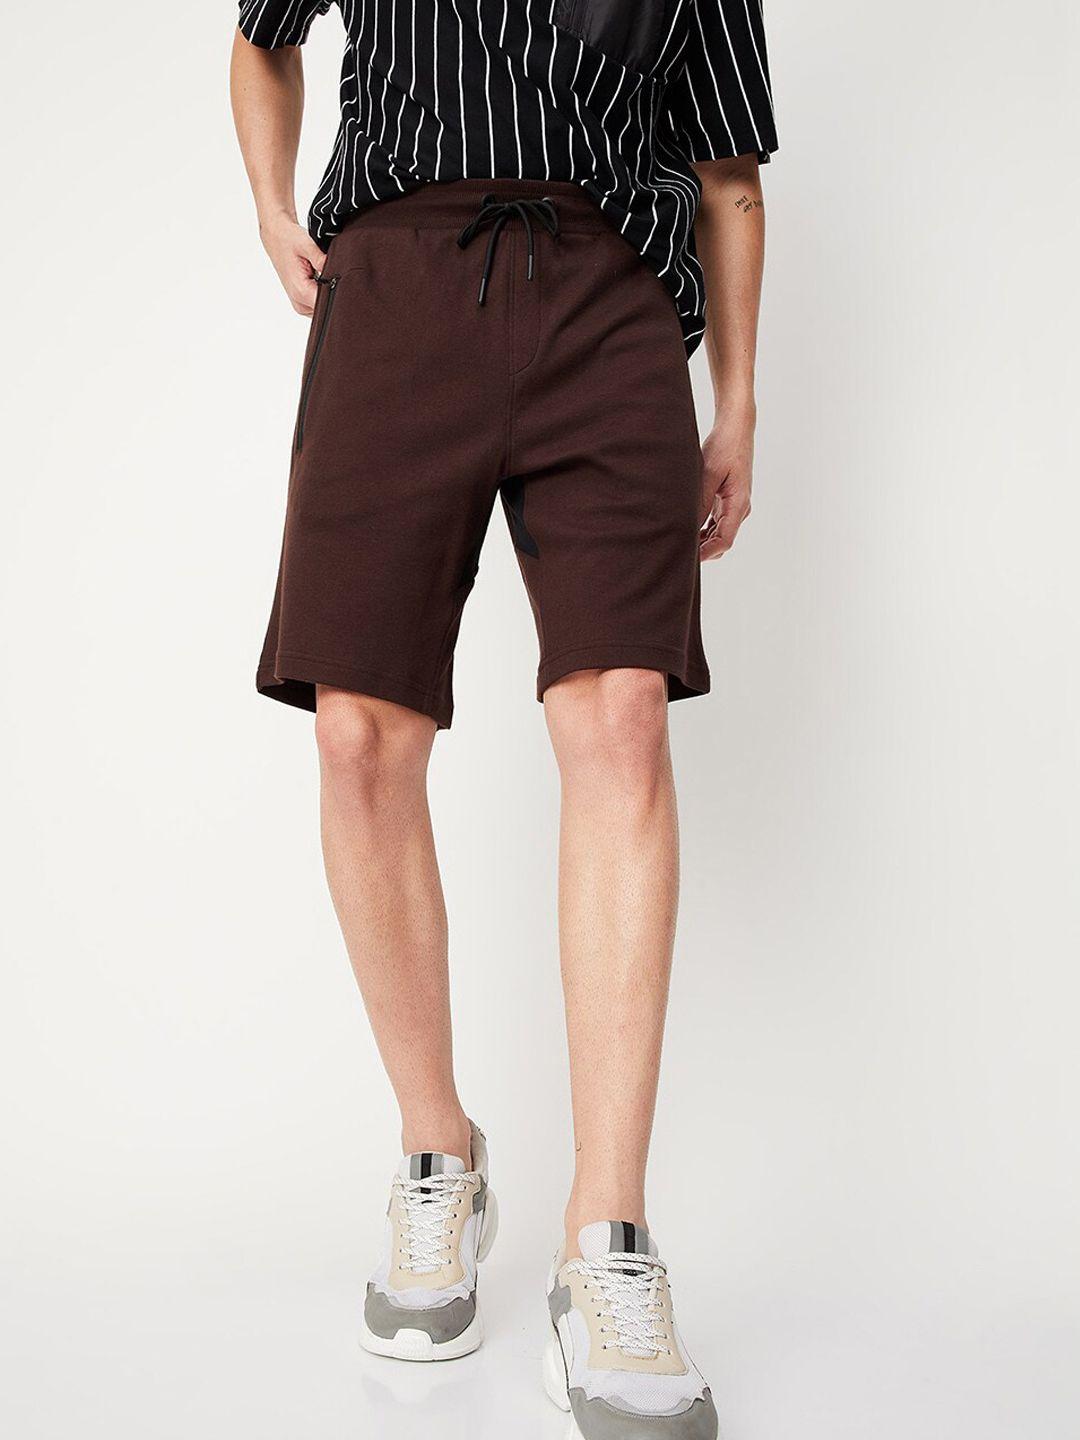 max men cotton regular fit shorts